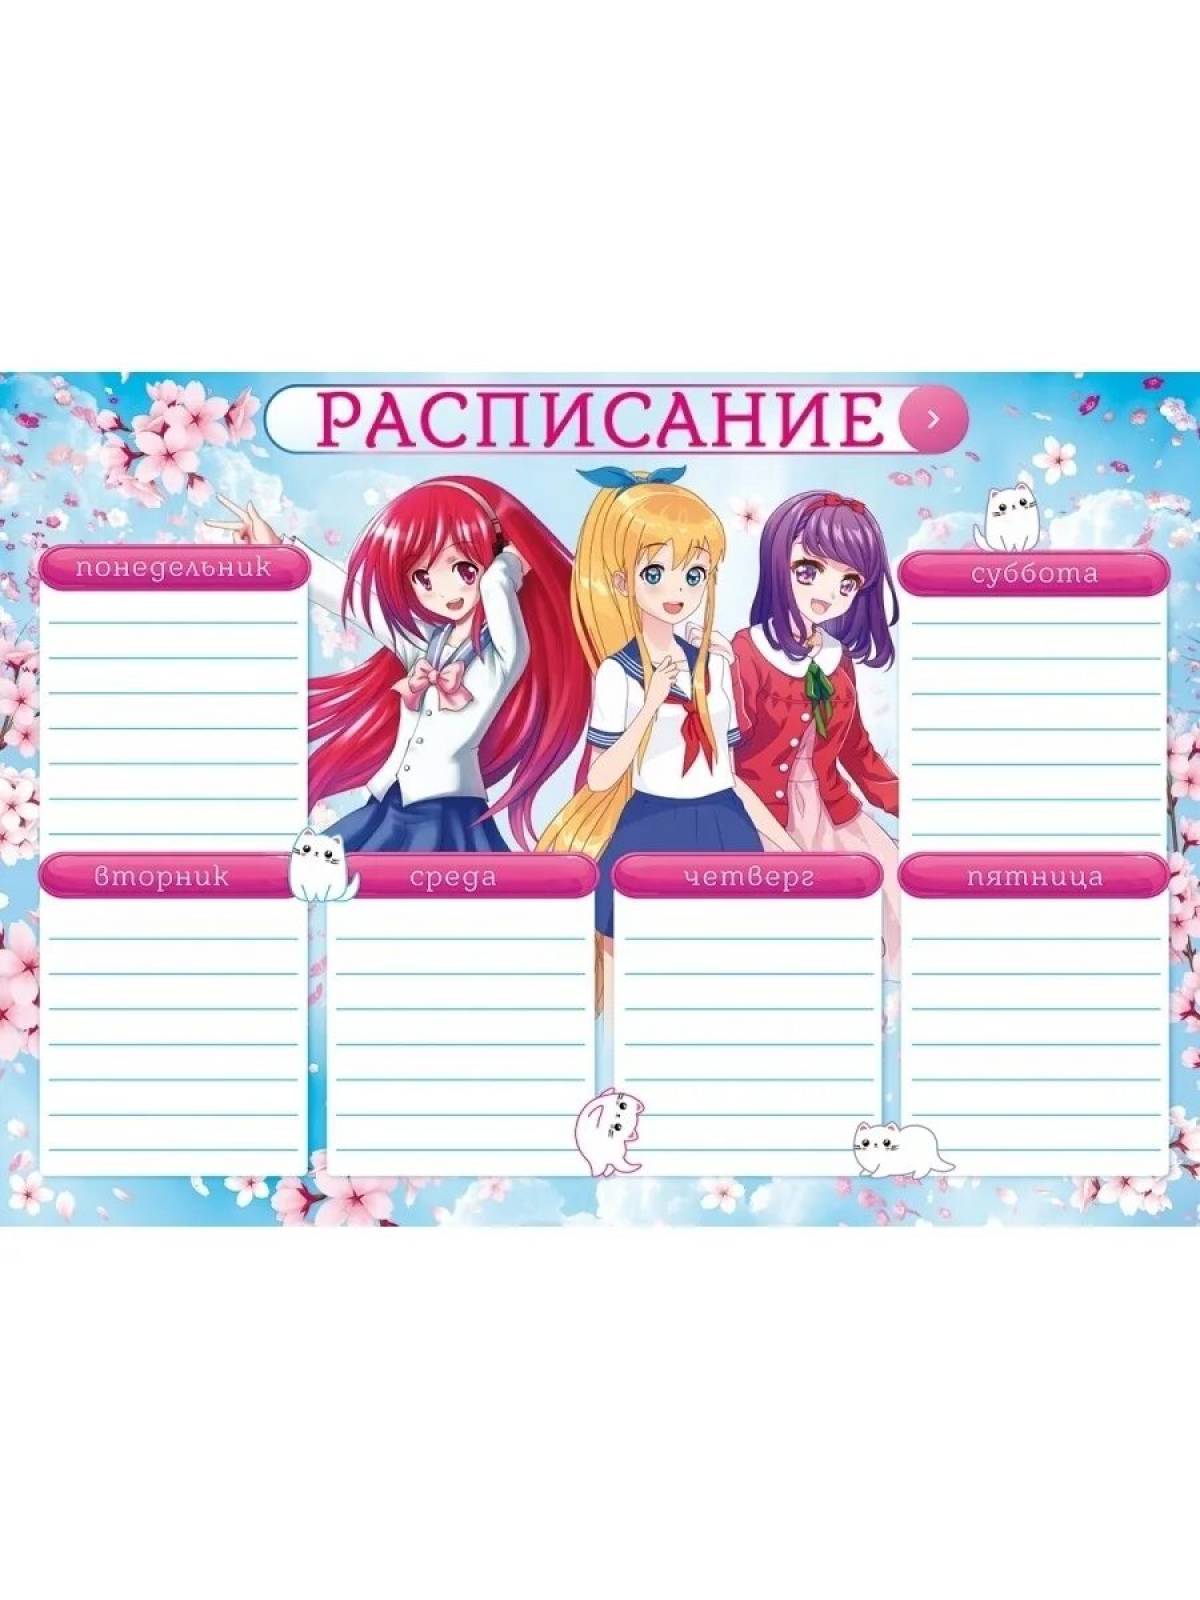 Anime class schedule #9